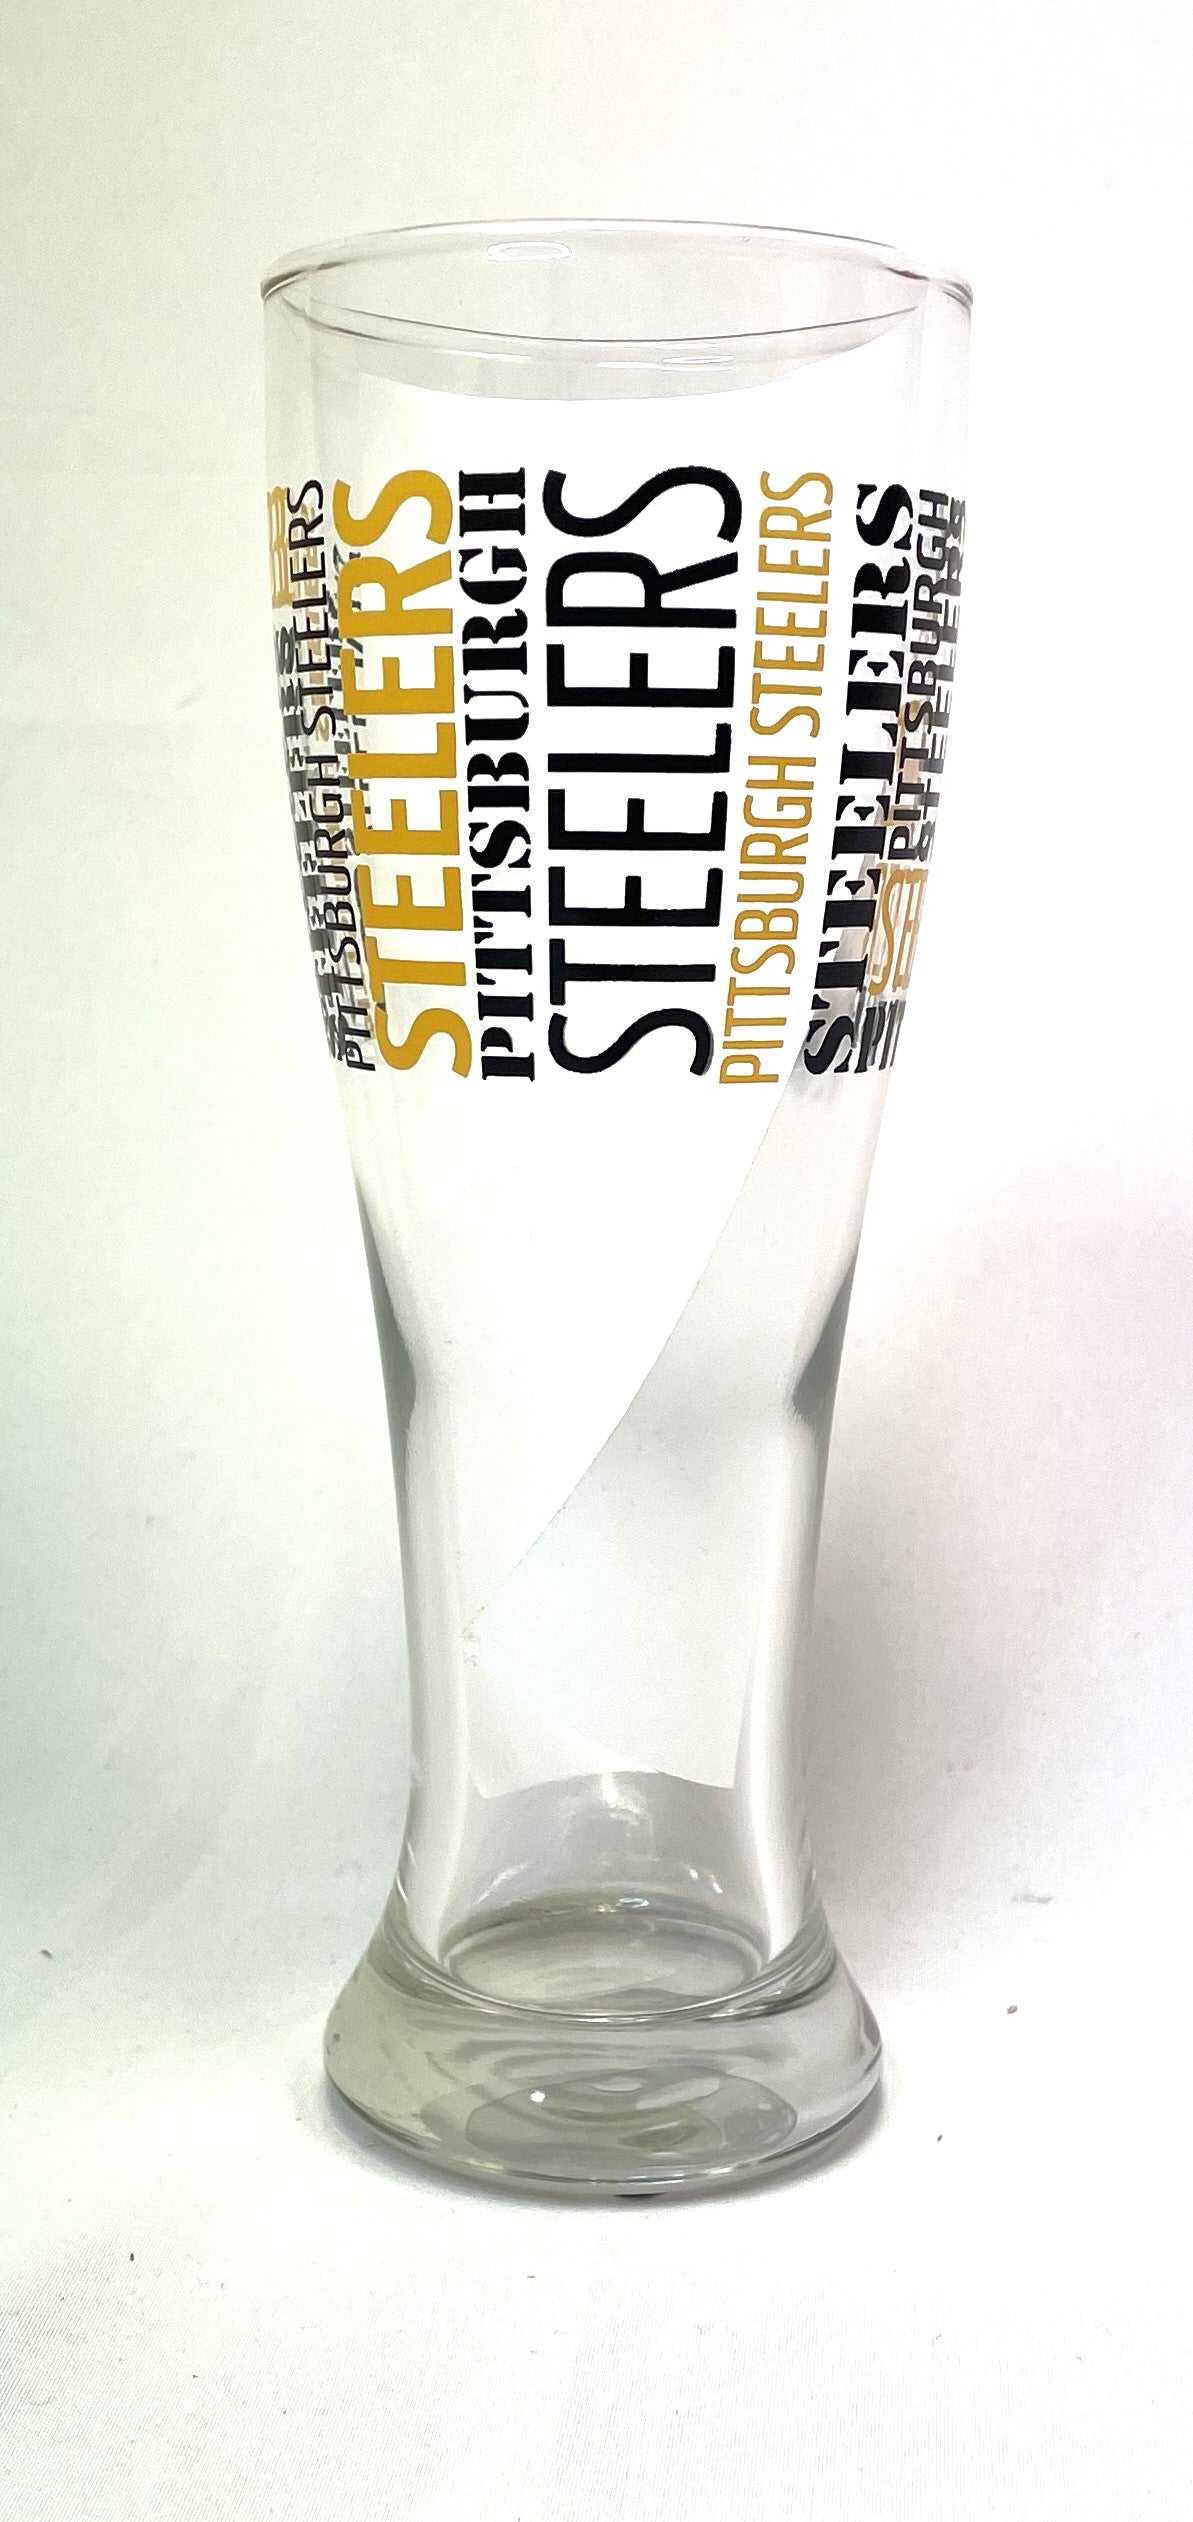 Pittsburgh Steelers Spirit Pilsner Glass - Closeout Item